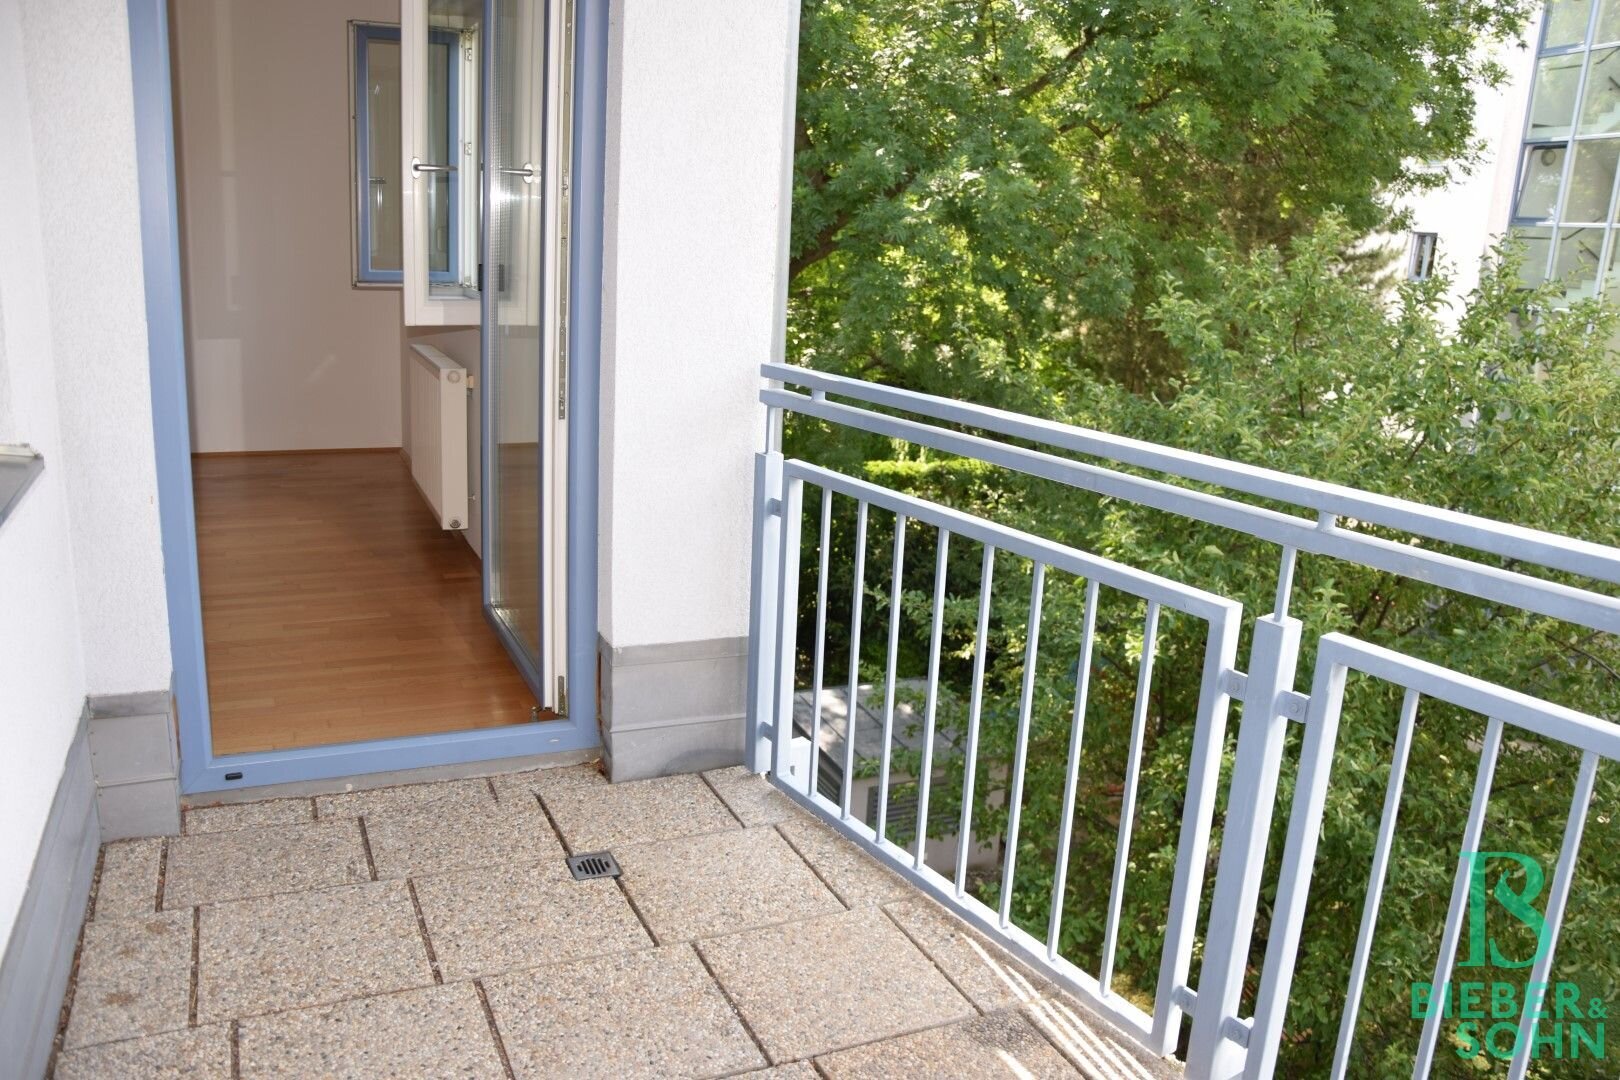 Objekt-Ansicht: Balkon/Blick Wohnraum